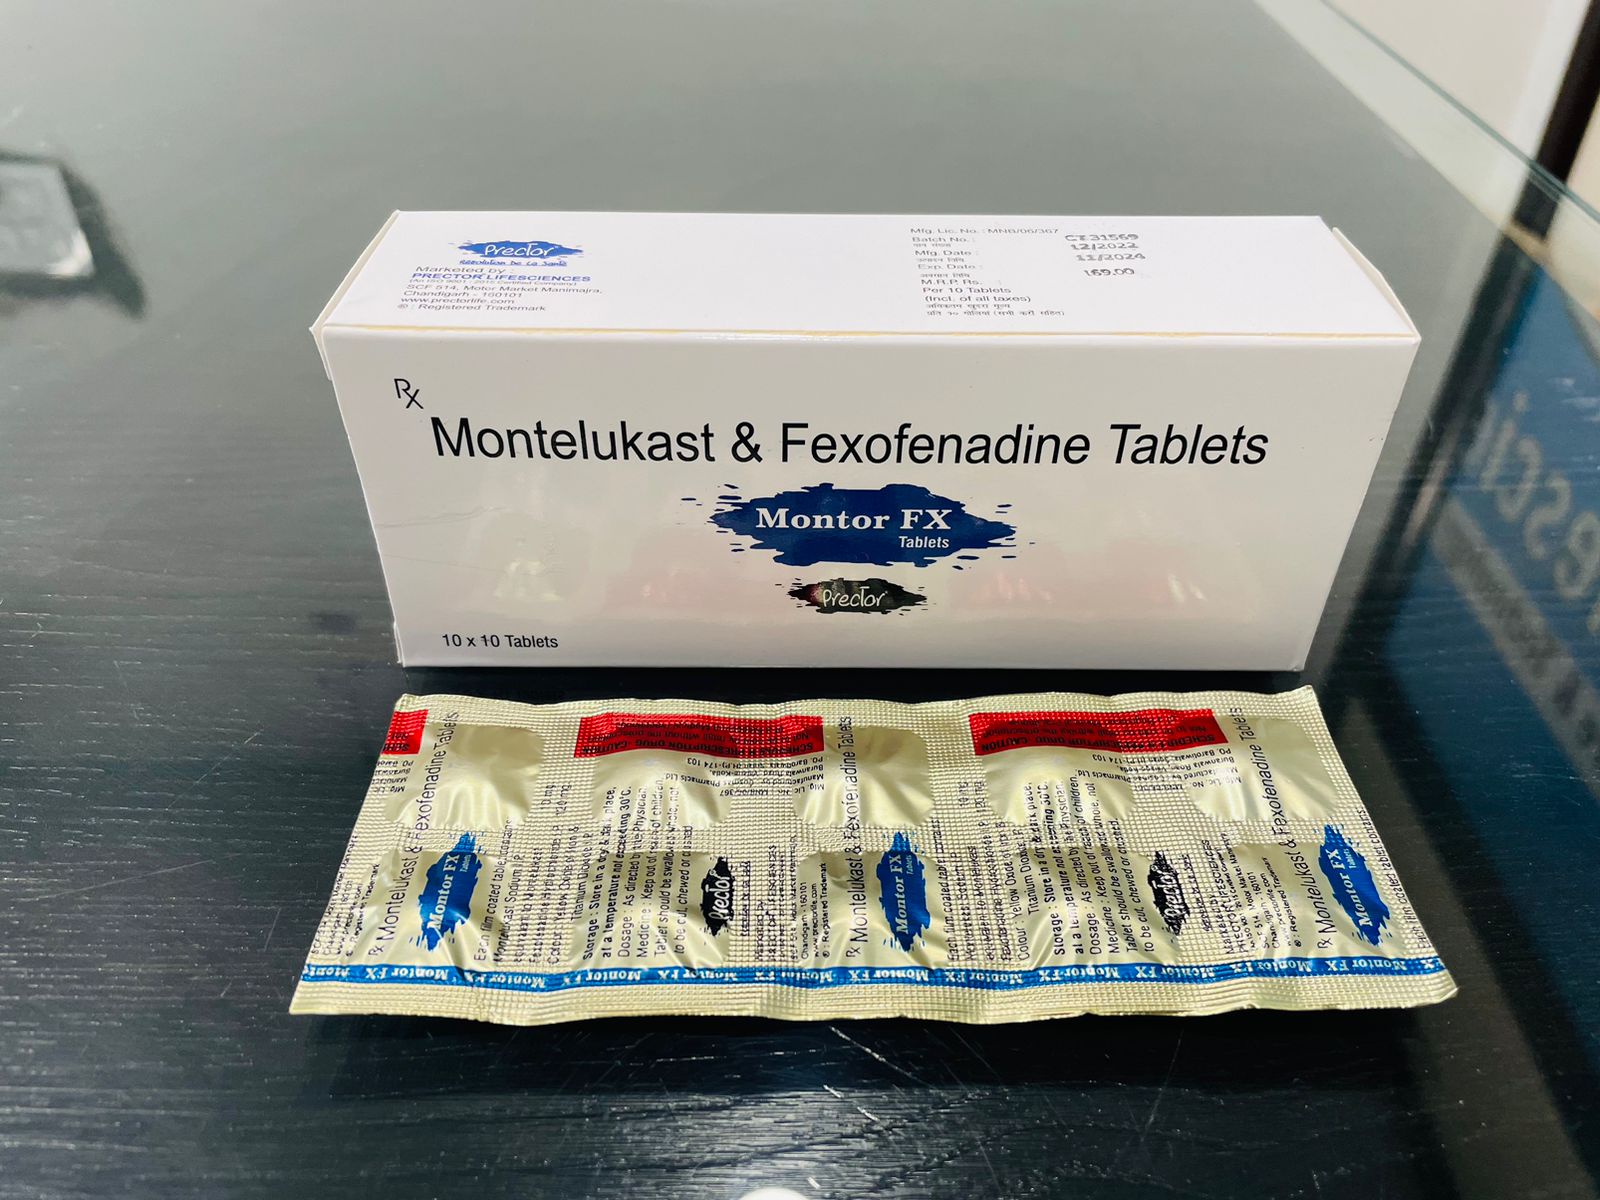 fexofinadine 120mg + montelukast 10mg tablet